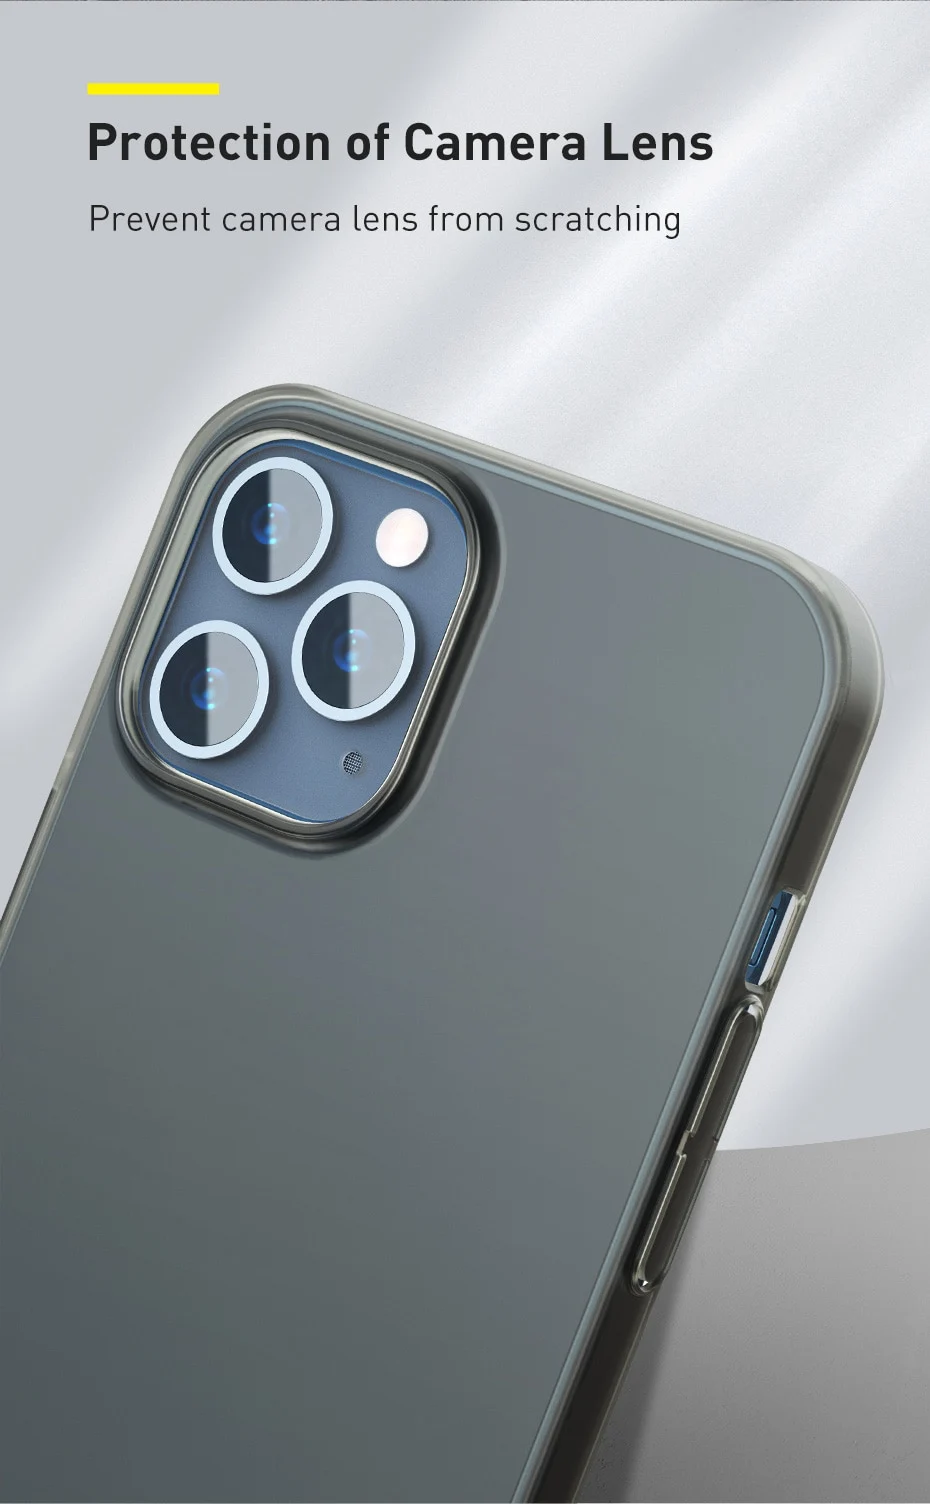 Husa Apple iPhone 12 Mini, Baseus Comfort Case, Negru, 5.4 inch